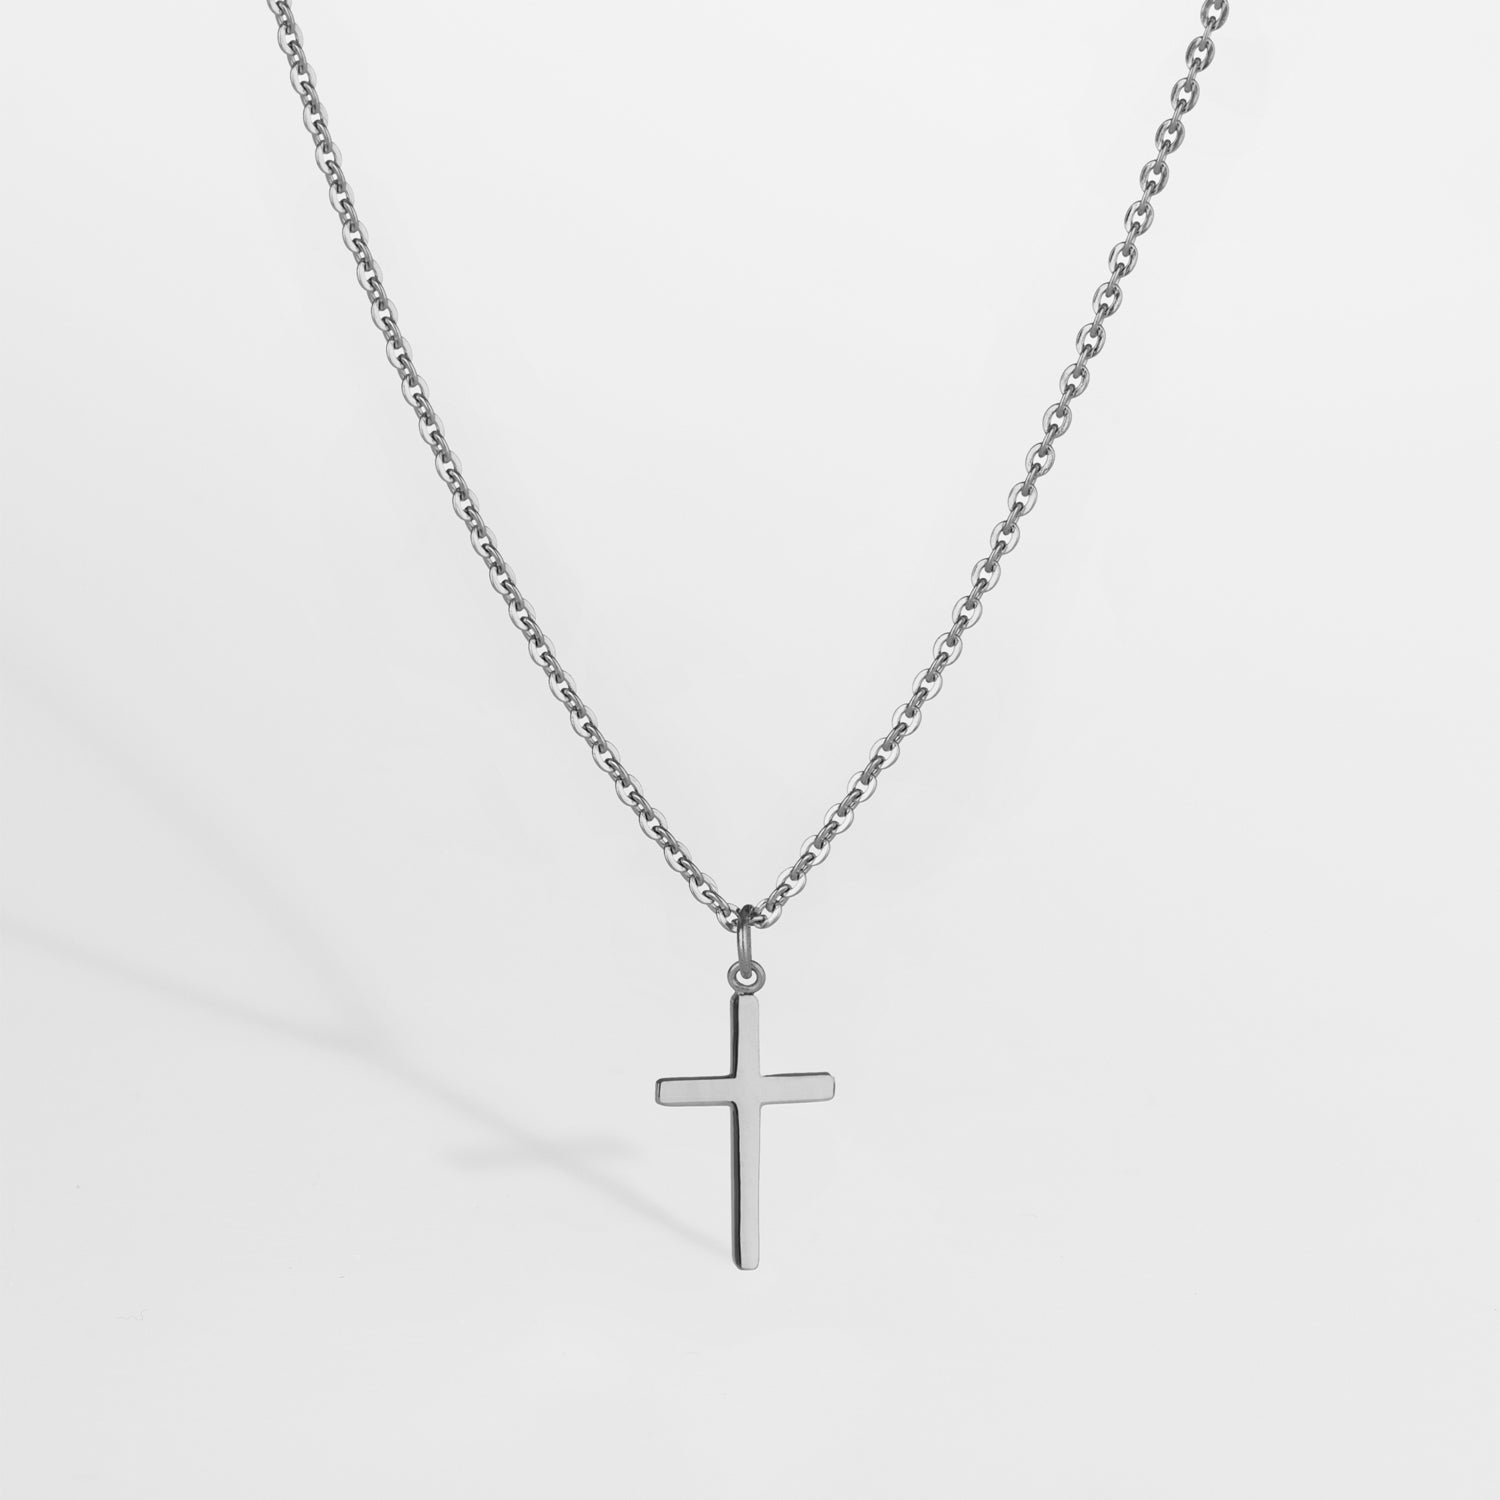 Small Cross Necklace - Silver Tone